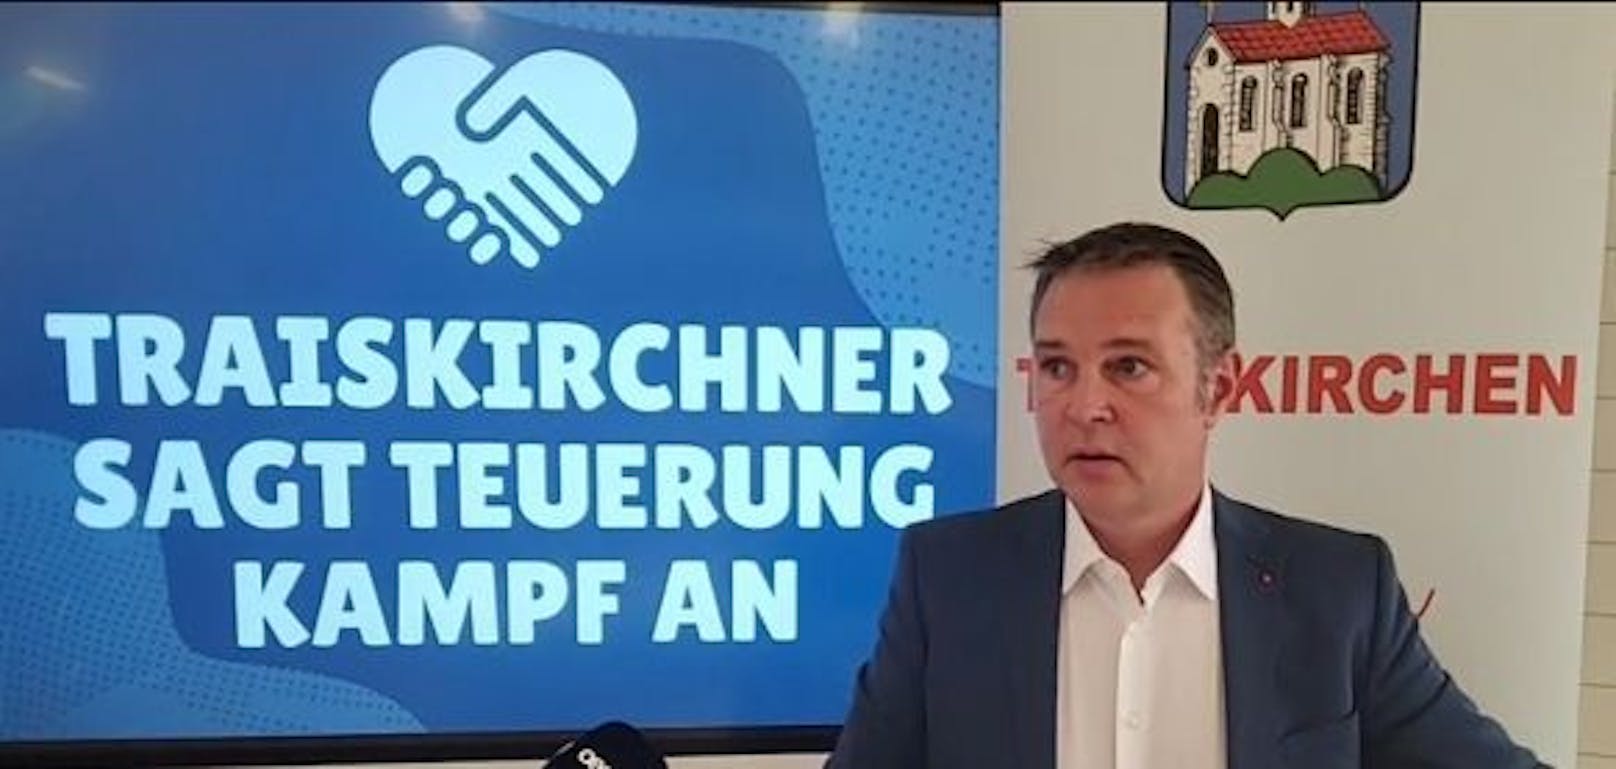 Bürgermeister Andreas Babler (SP) will Gym: "Baden bekommt 3. Gym, Traiskirchen keines"